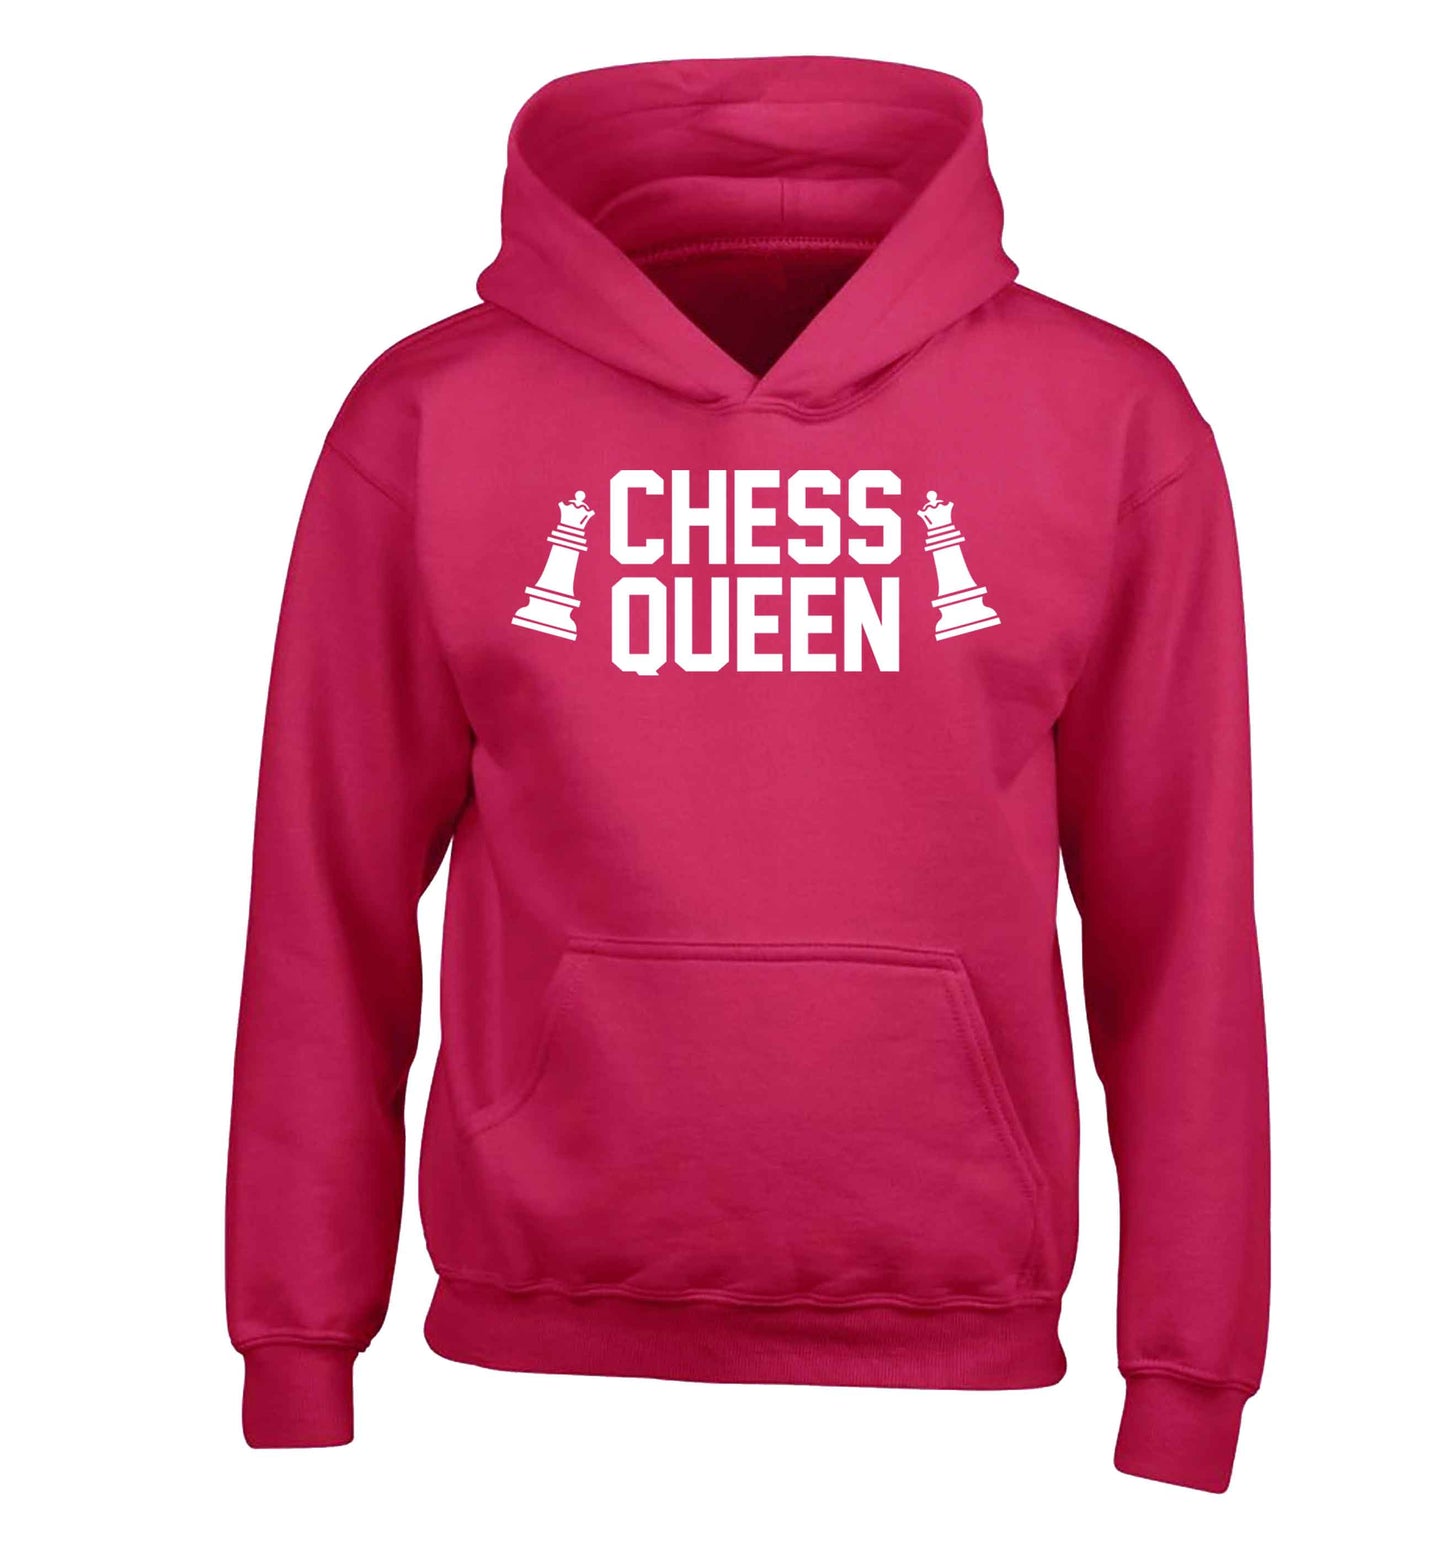 Chess queen children's pink hoodie 12-13 Years